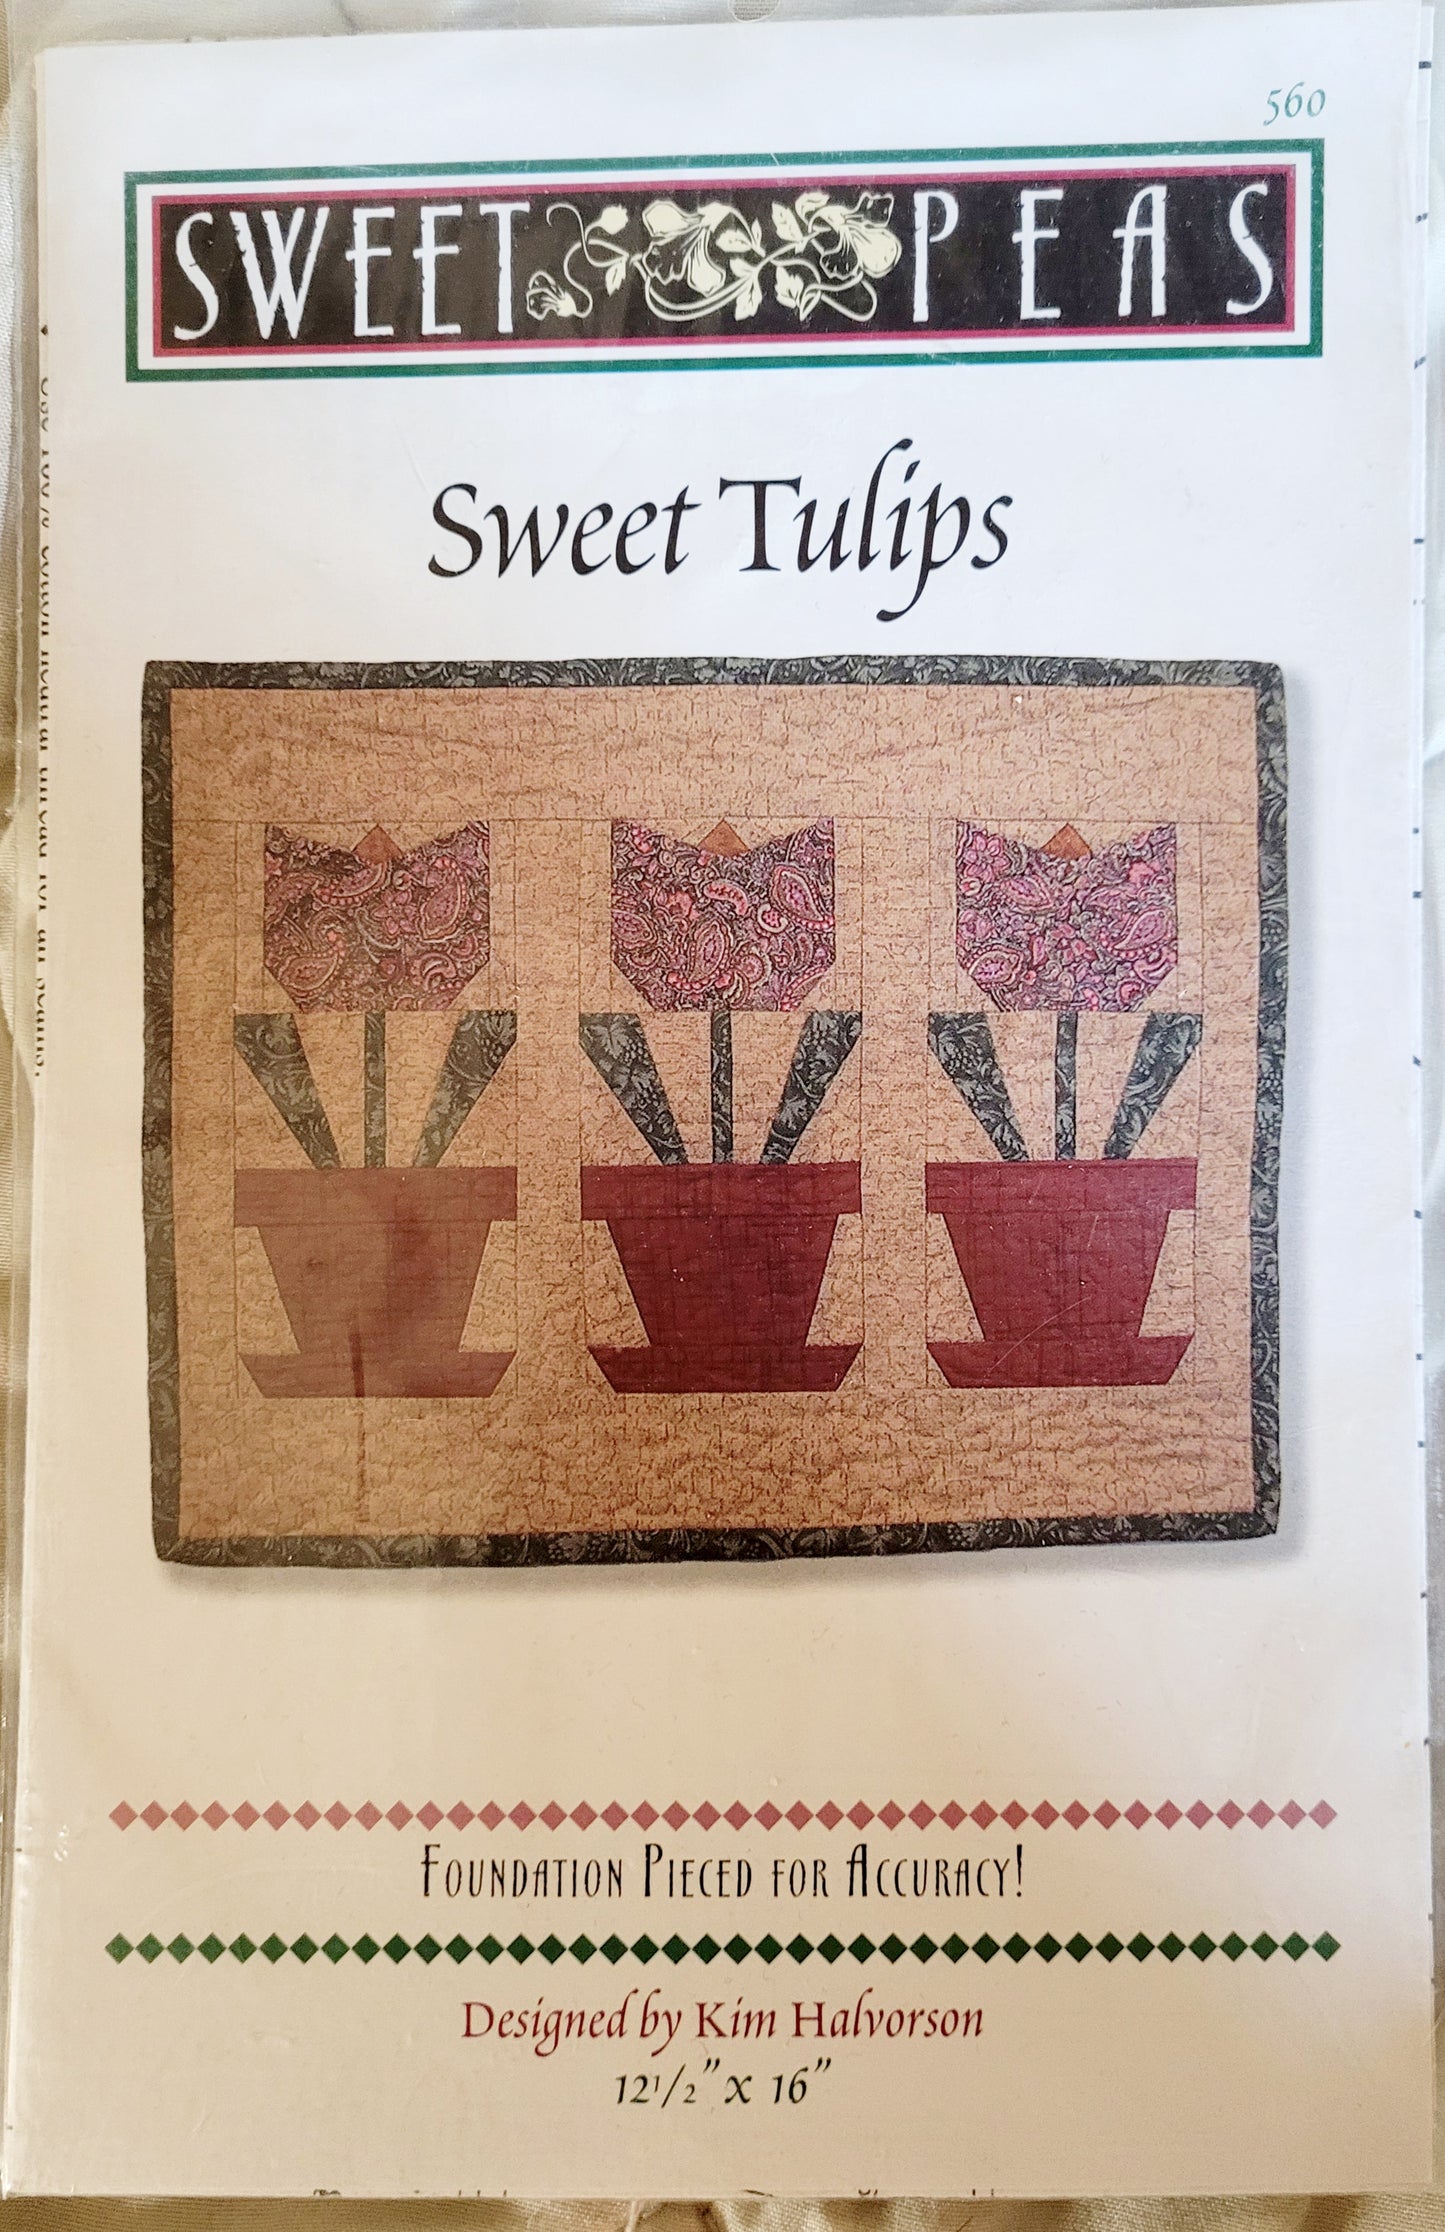 NEW “Sweet Tulips” #560 Wall Hanging by Kim Halvorson #1997 (12.5” x 16”)